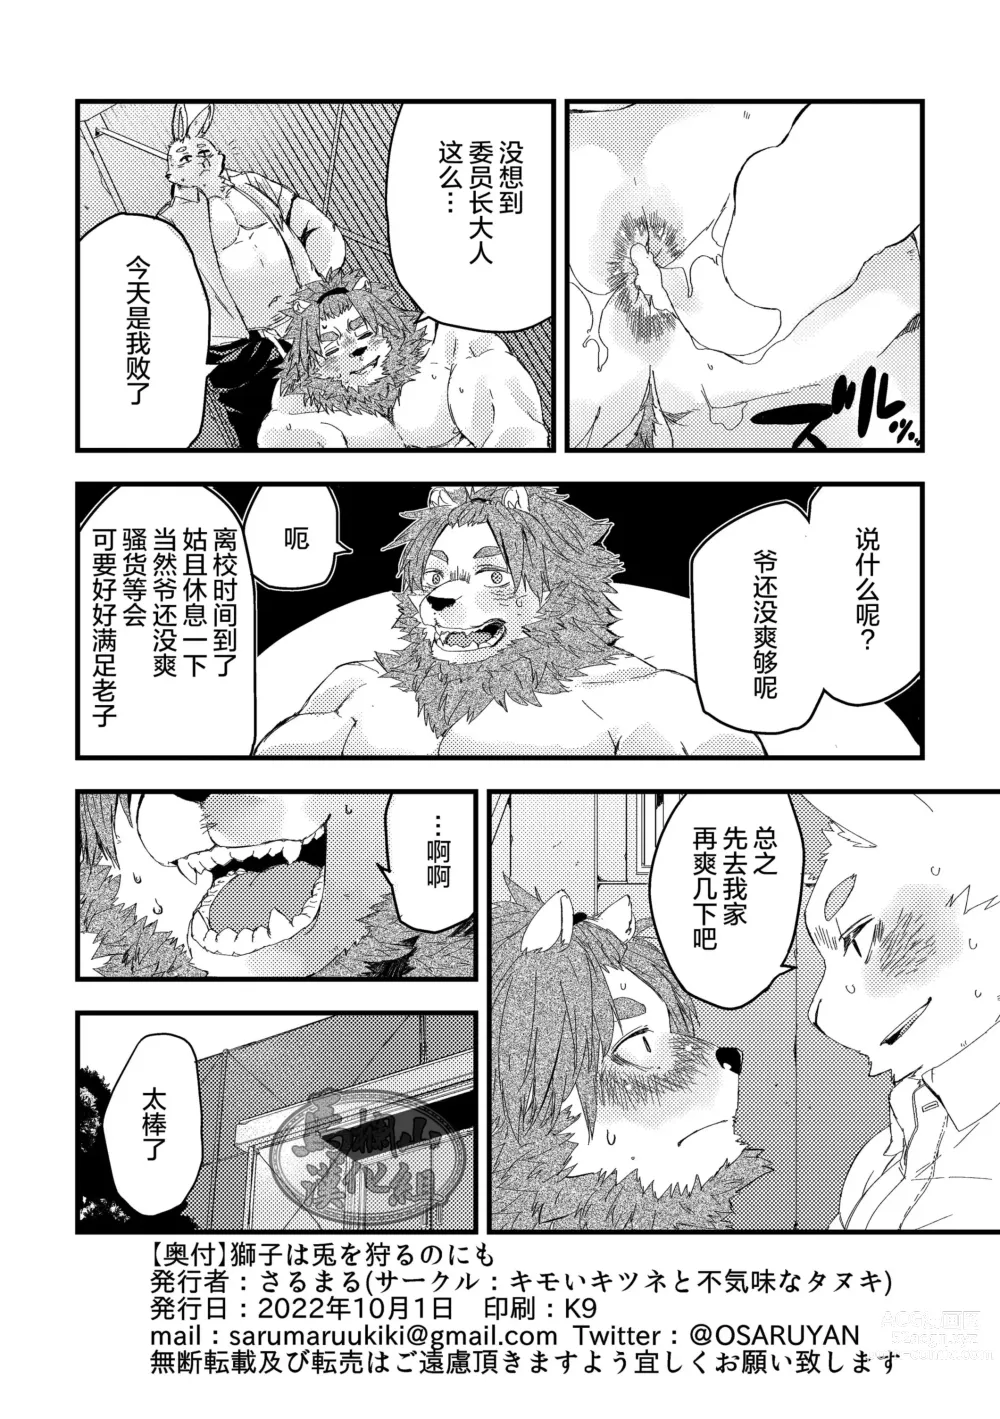 Page 25 of manga 獅子は兎を狩るのにも